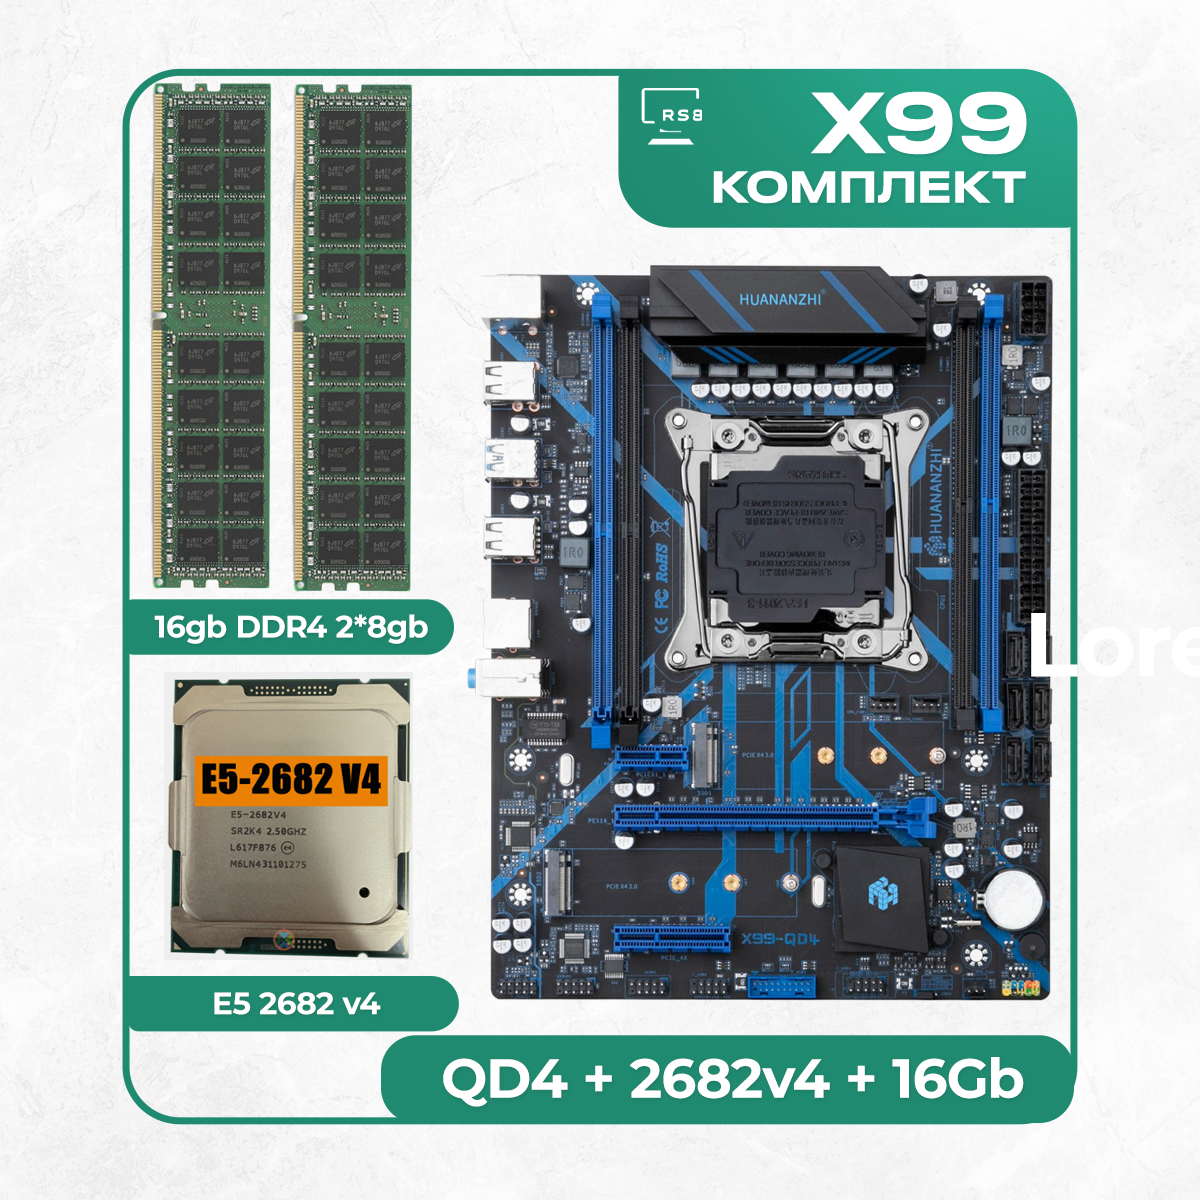 Комплект материнской платы X99: Huananzhi QD4 2011v3 + Xeon E5 2682v4 + DDR4 16Гб